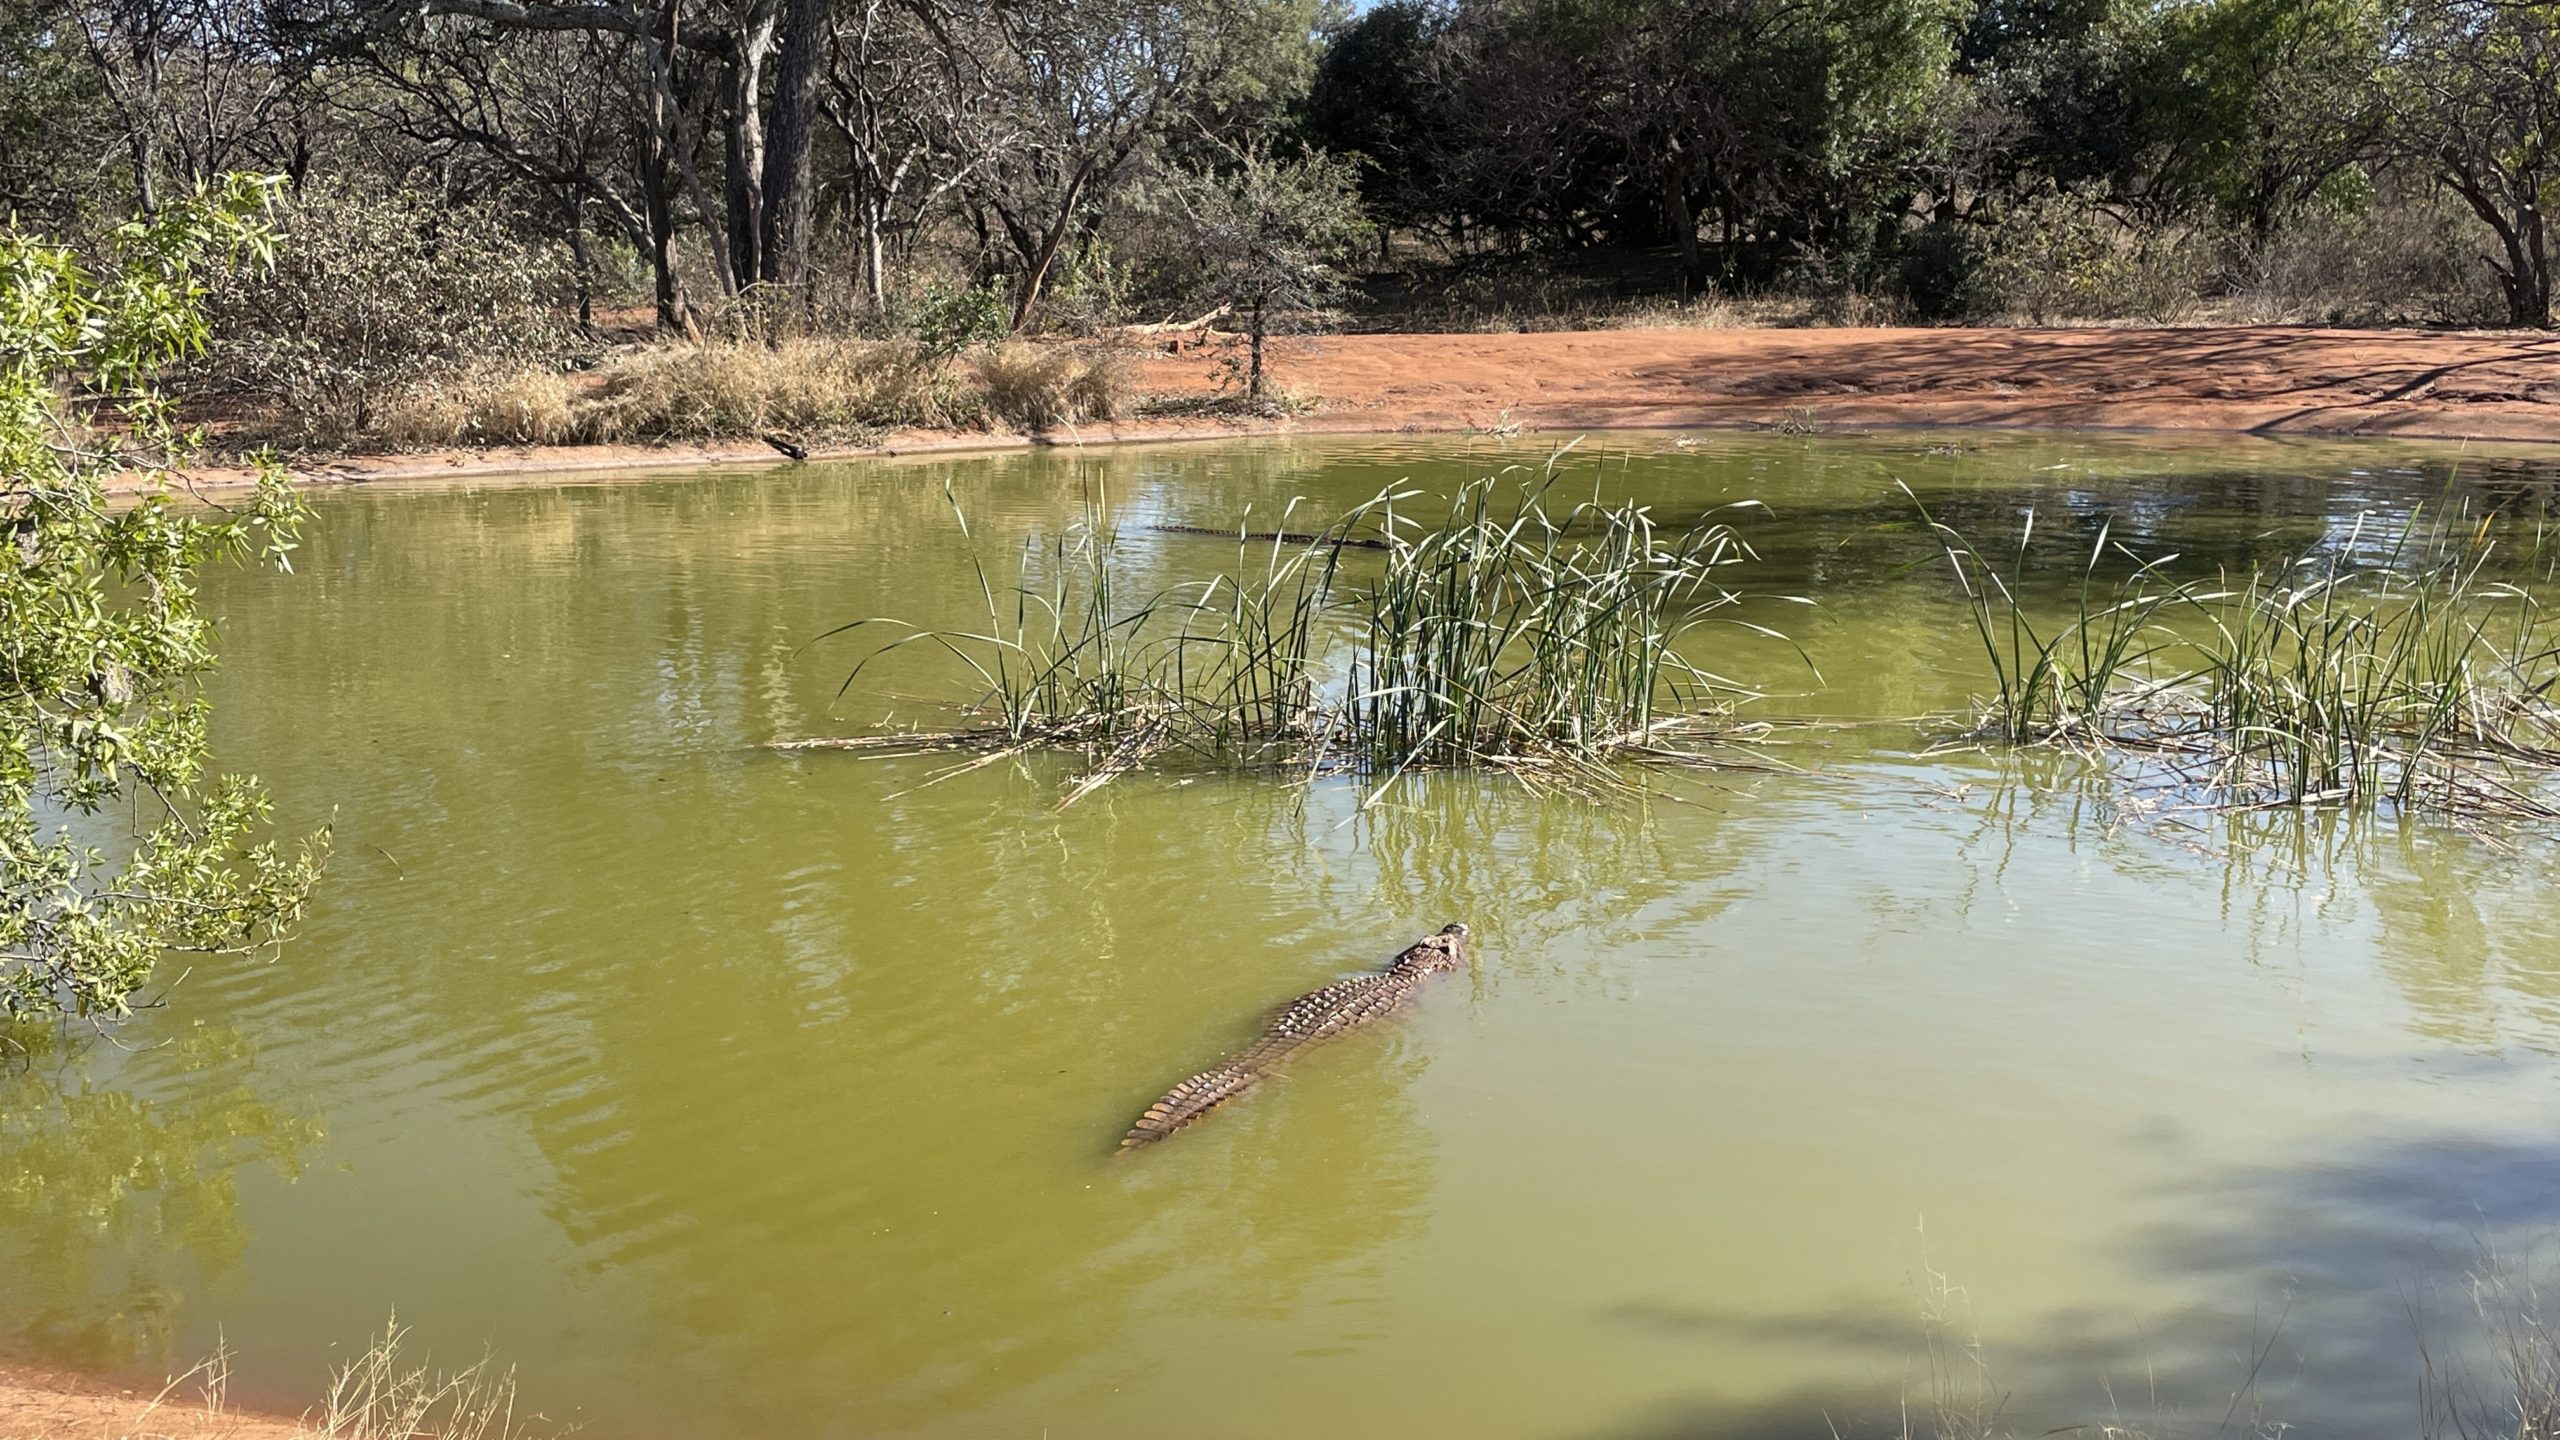 Sabatana Private Reserve Crocodile Swimming in Swamp Point Hacks by Daniel Sciberras